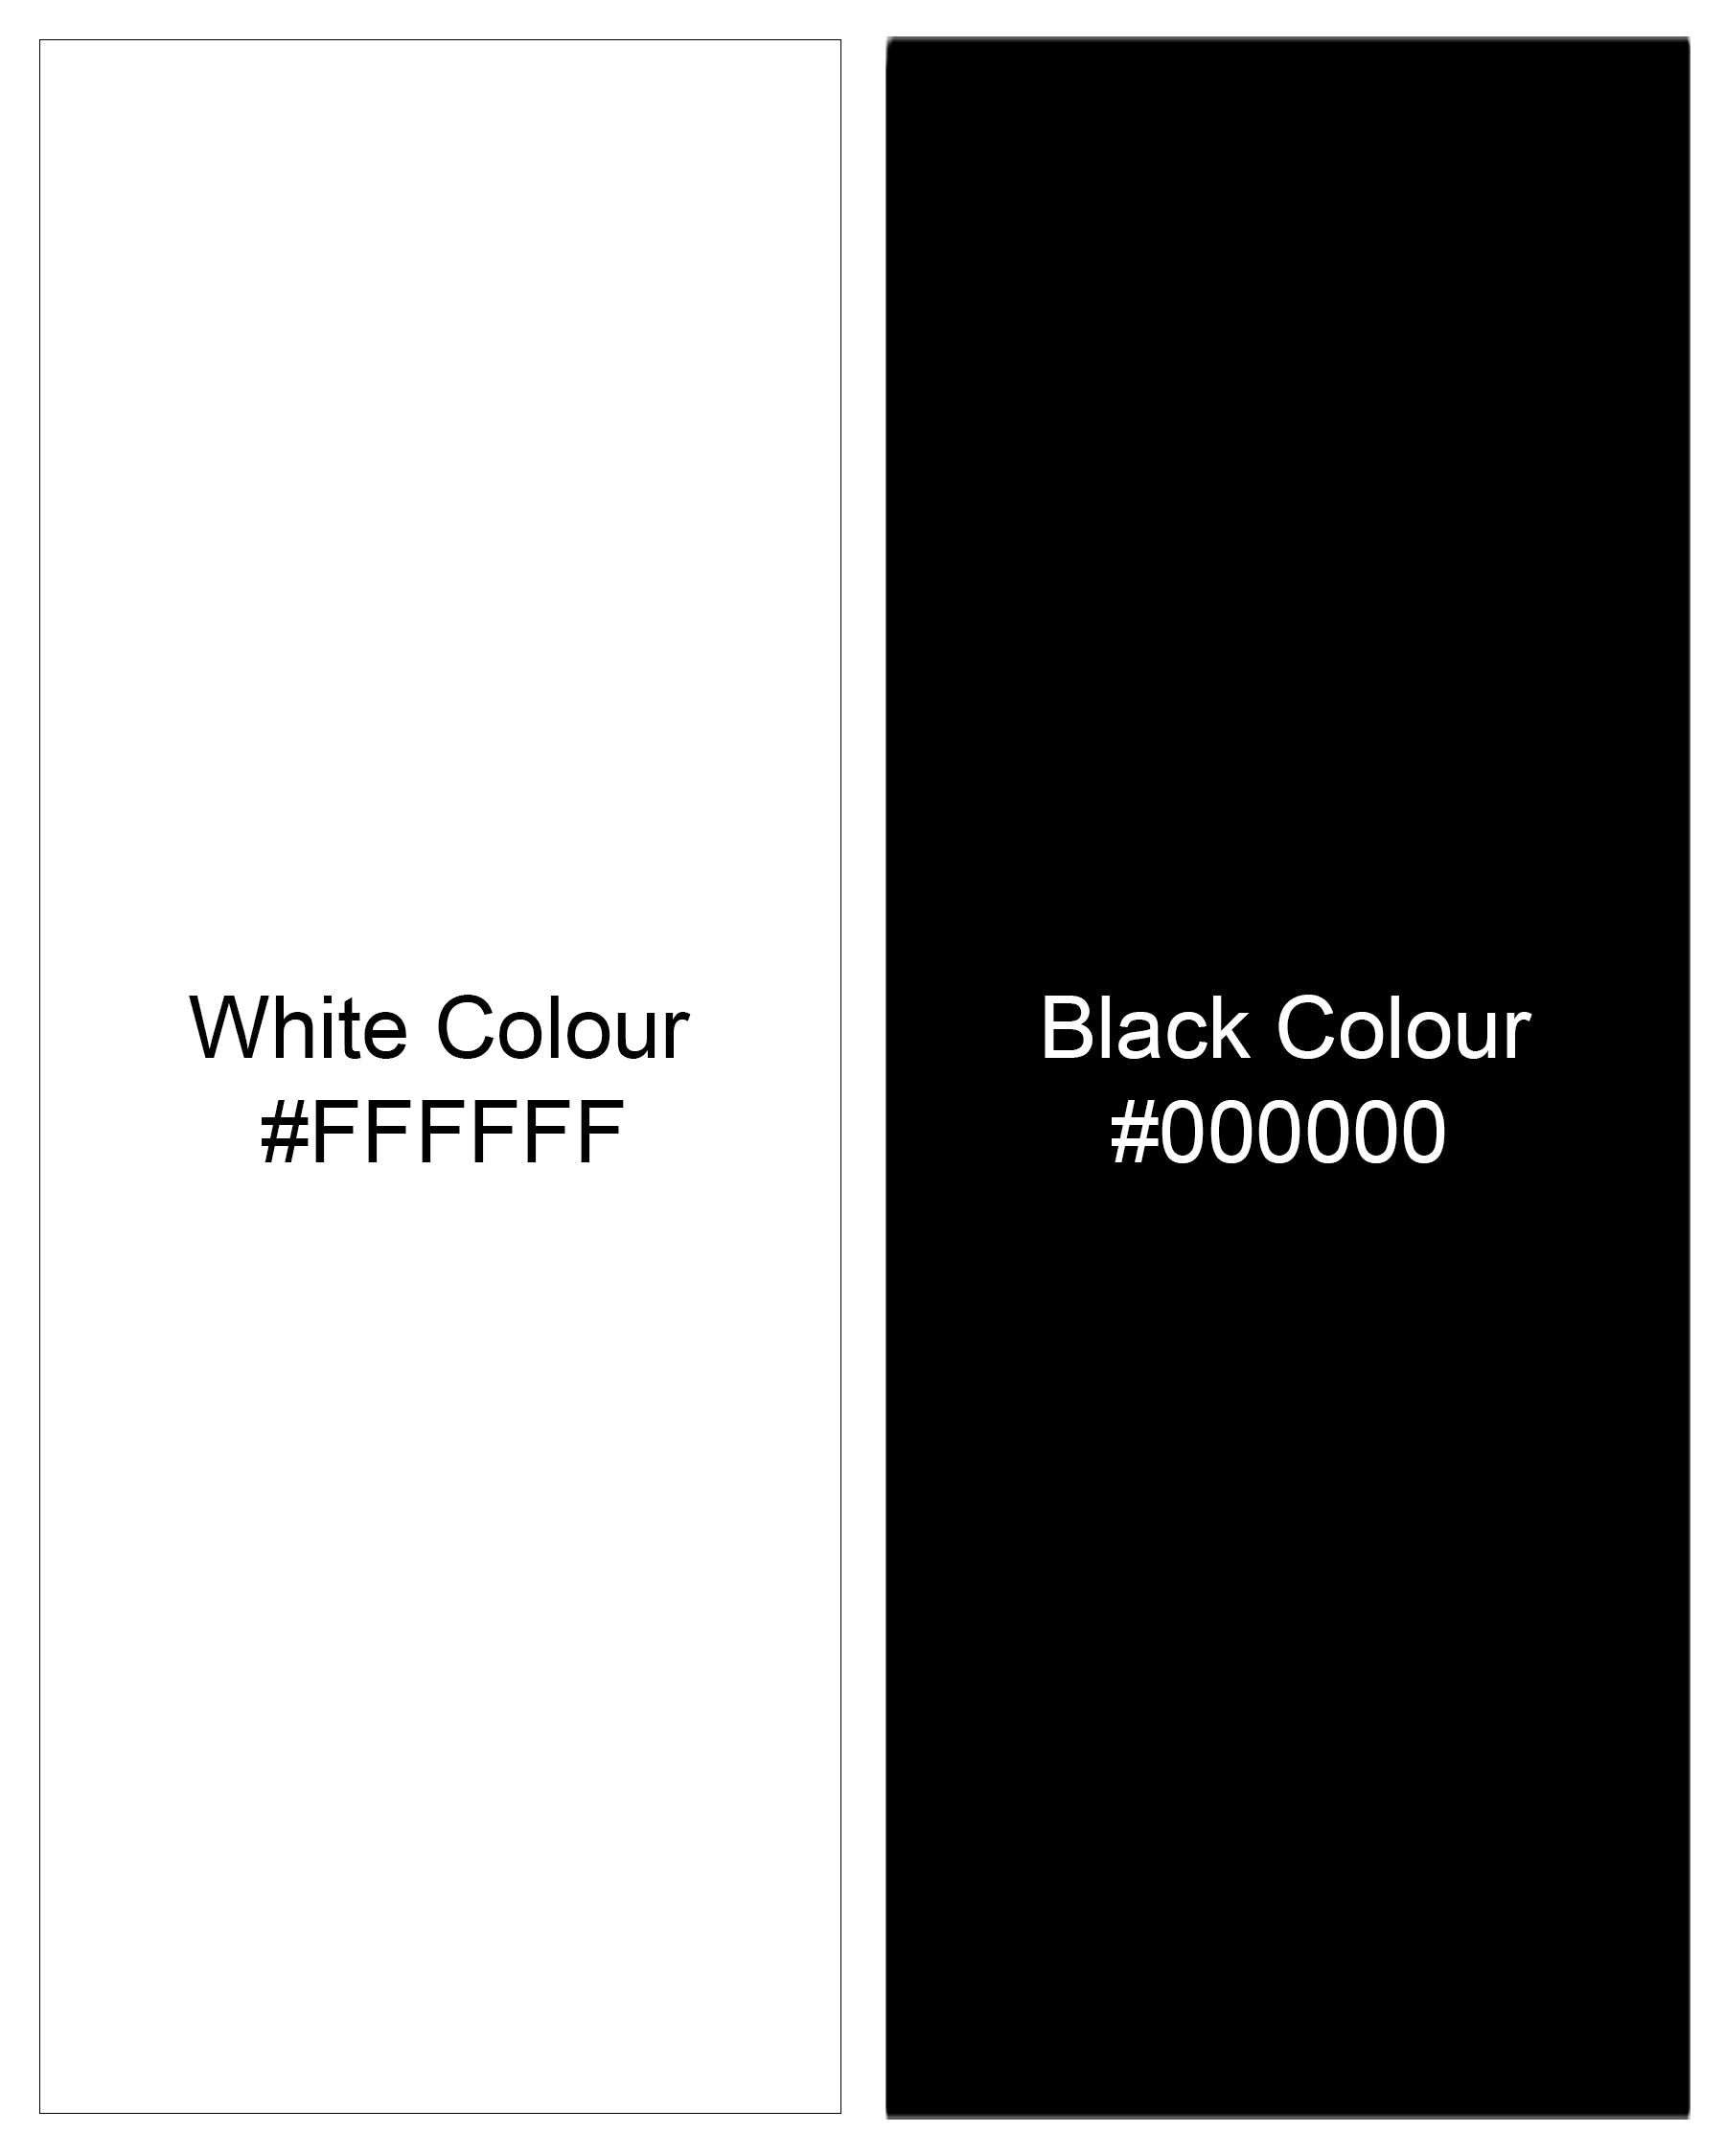 Jade Black and White Mini Checkered Pattern Premium Cotton Shirt 7880-BLK -38,7880-BLK -H-38,7880-BLK -39,7880-BLK -H-39,7880-BLK -40,7880-BLK -H-40,7880-BLK -42,7880-BLK -H-42,7880-BLK -44,7880-BLK -H-44,7880-BLK -46,7880-BLK -H-46,7880-BLK -48,7880-BLK -H-48,7880-BLK -50,7880-BLK -H-50,7880-BLK -52,7880-BLK -H-52